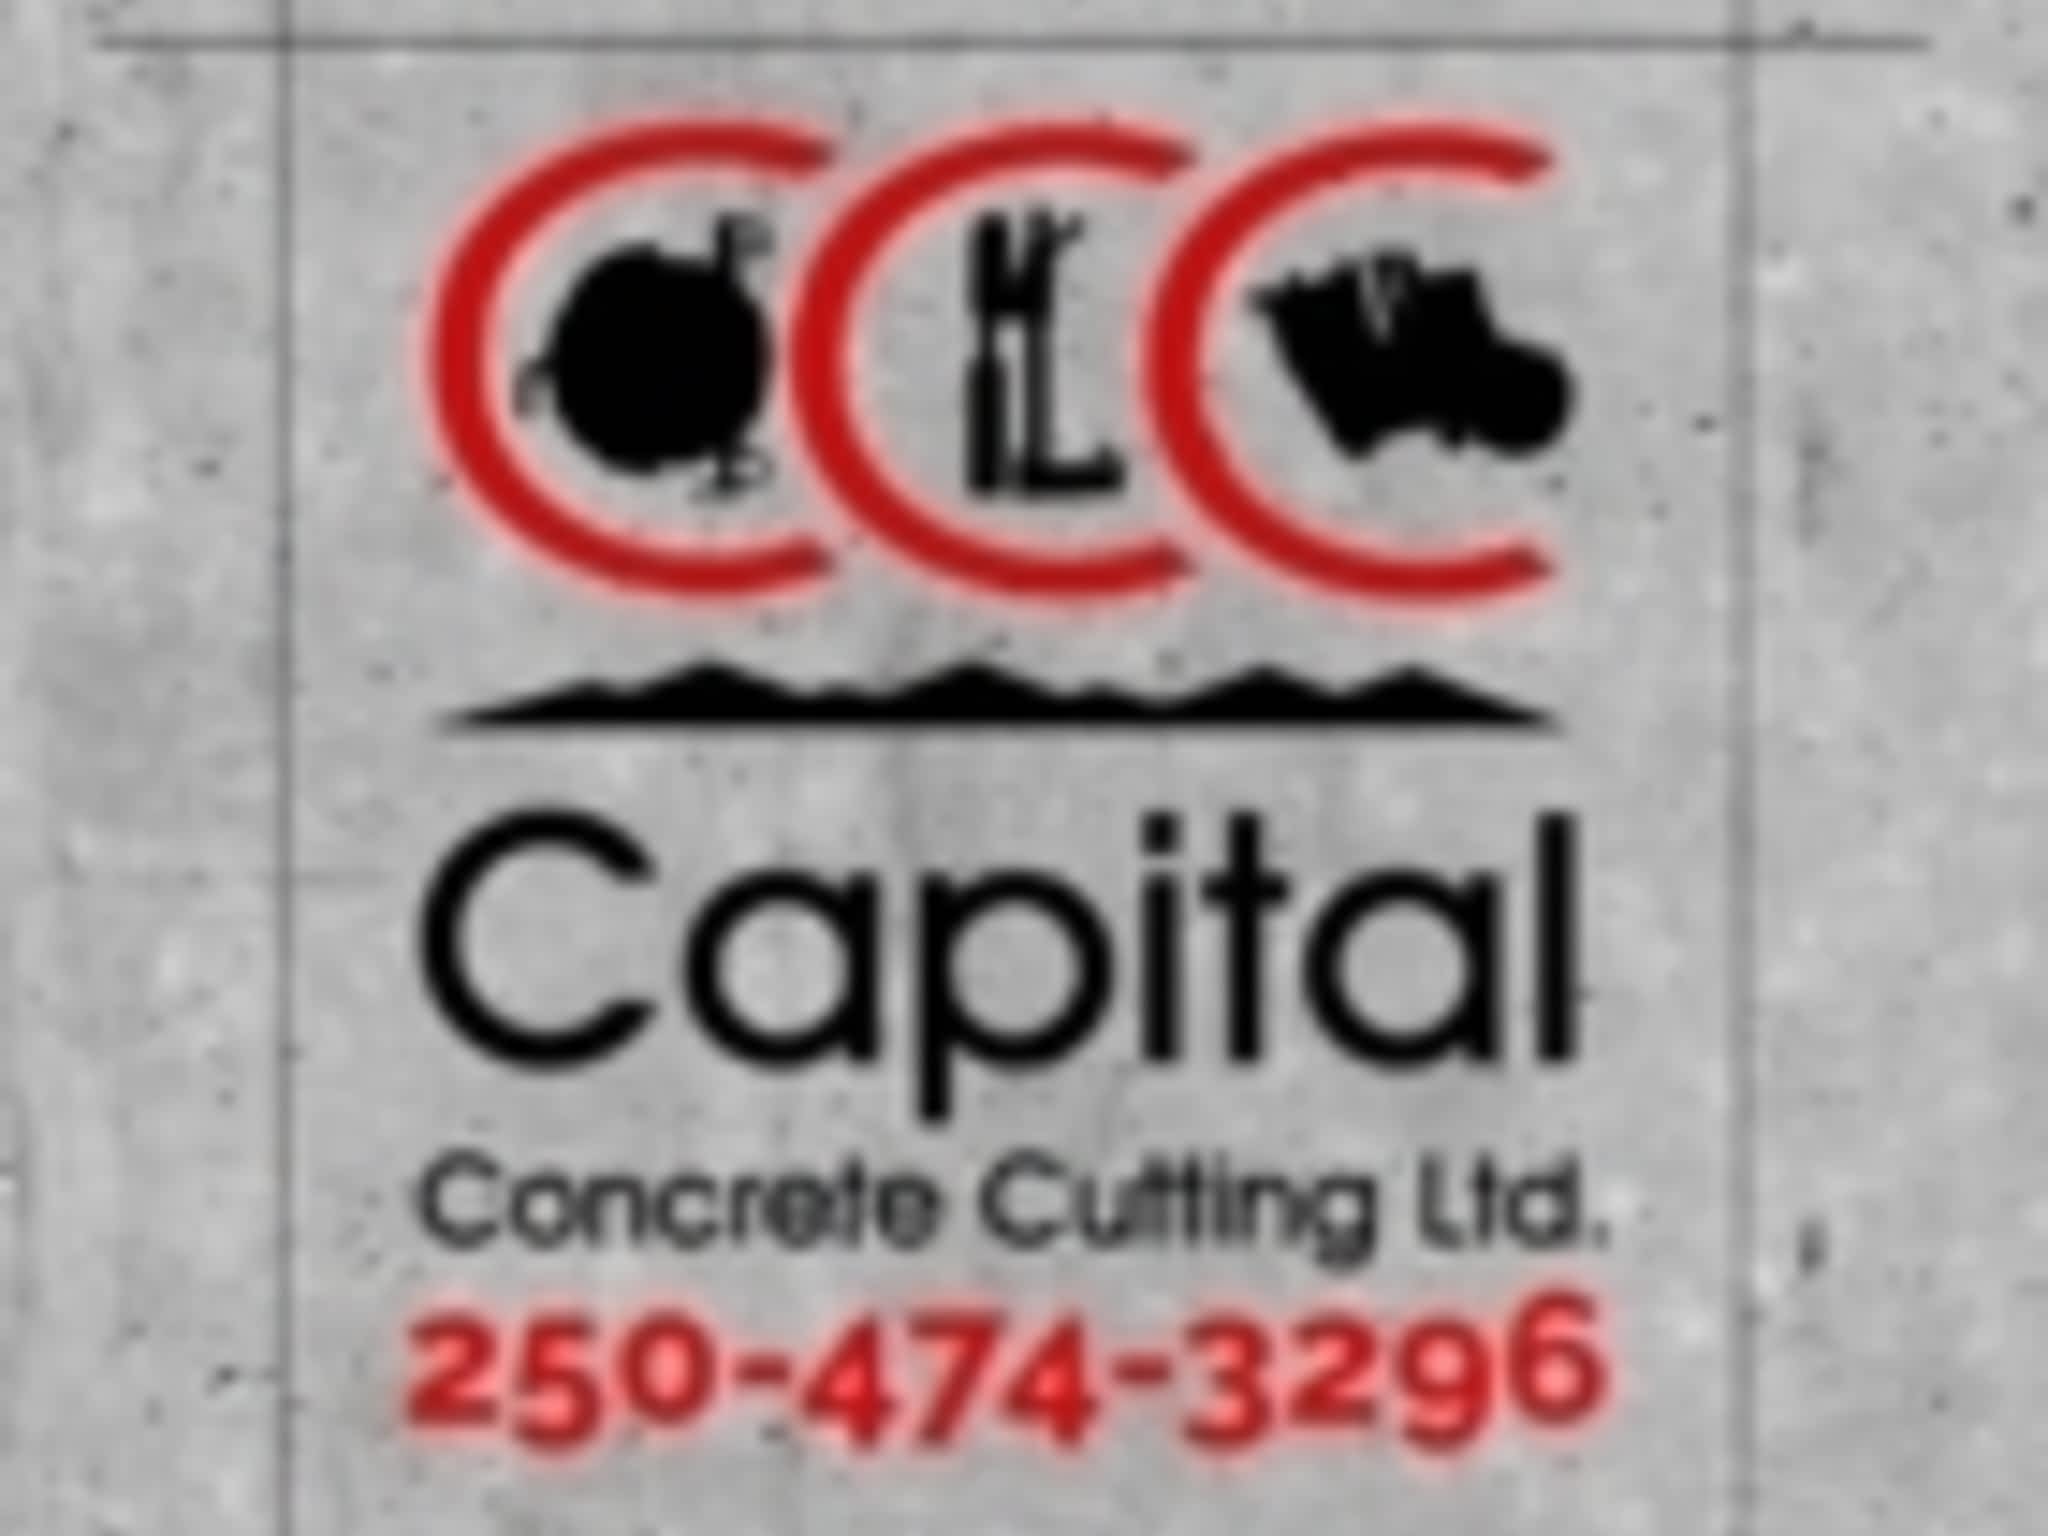 photo Capital Concrete Cutting Ltd